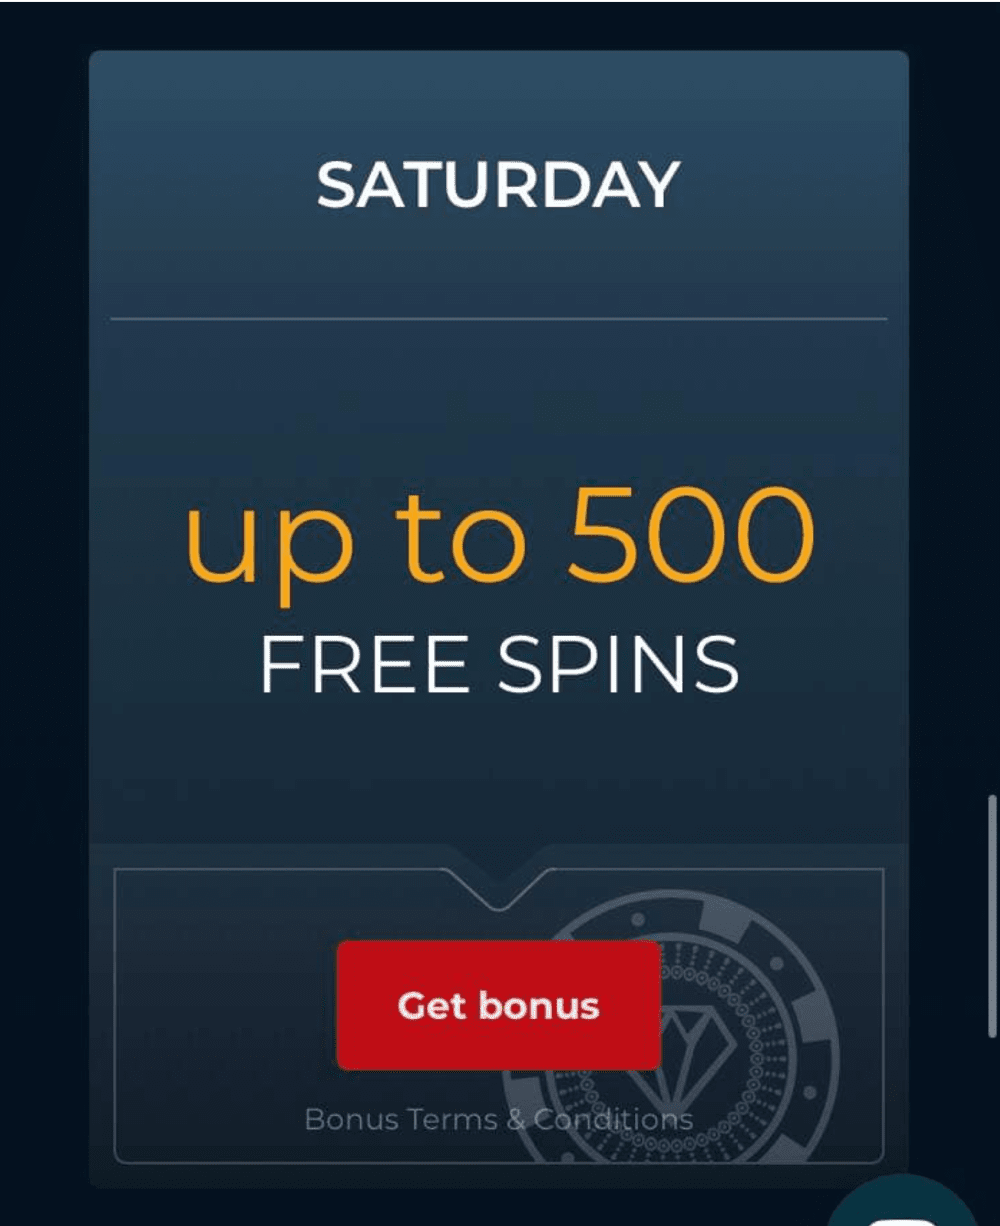 Casino4U Free Spins on Saturday